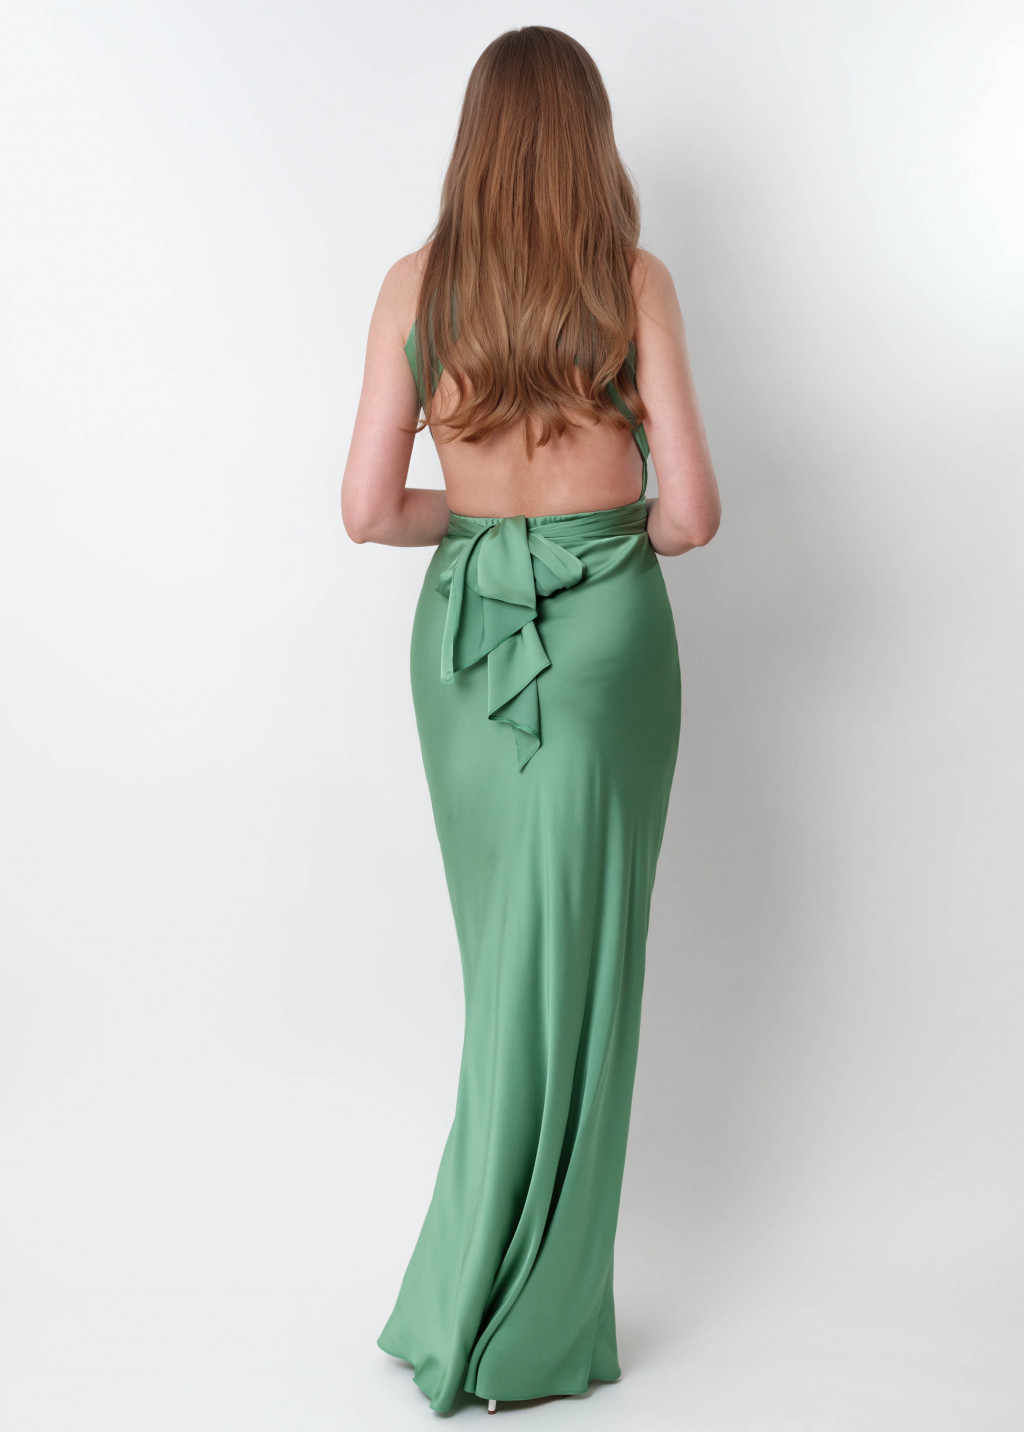 Olive green infinity long dress